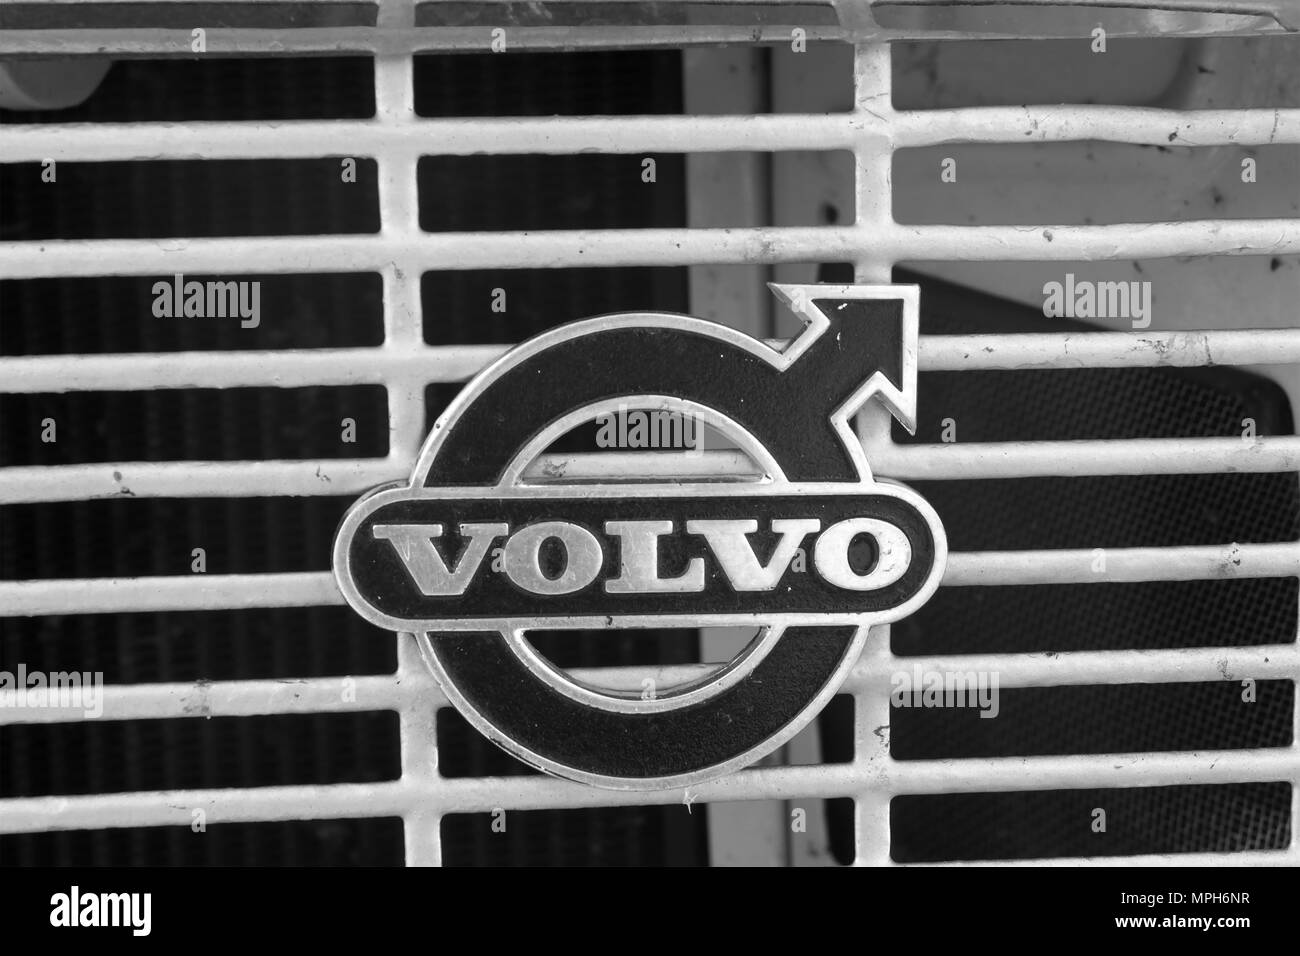 1966 Volvo Duett 210 grill logo detail Stock Photo